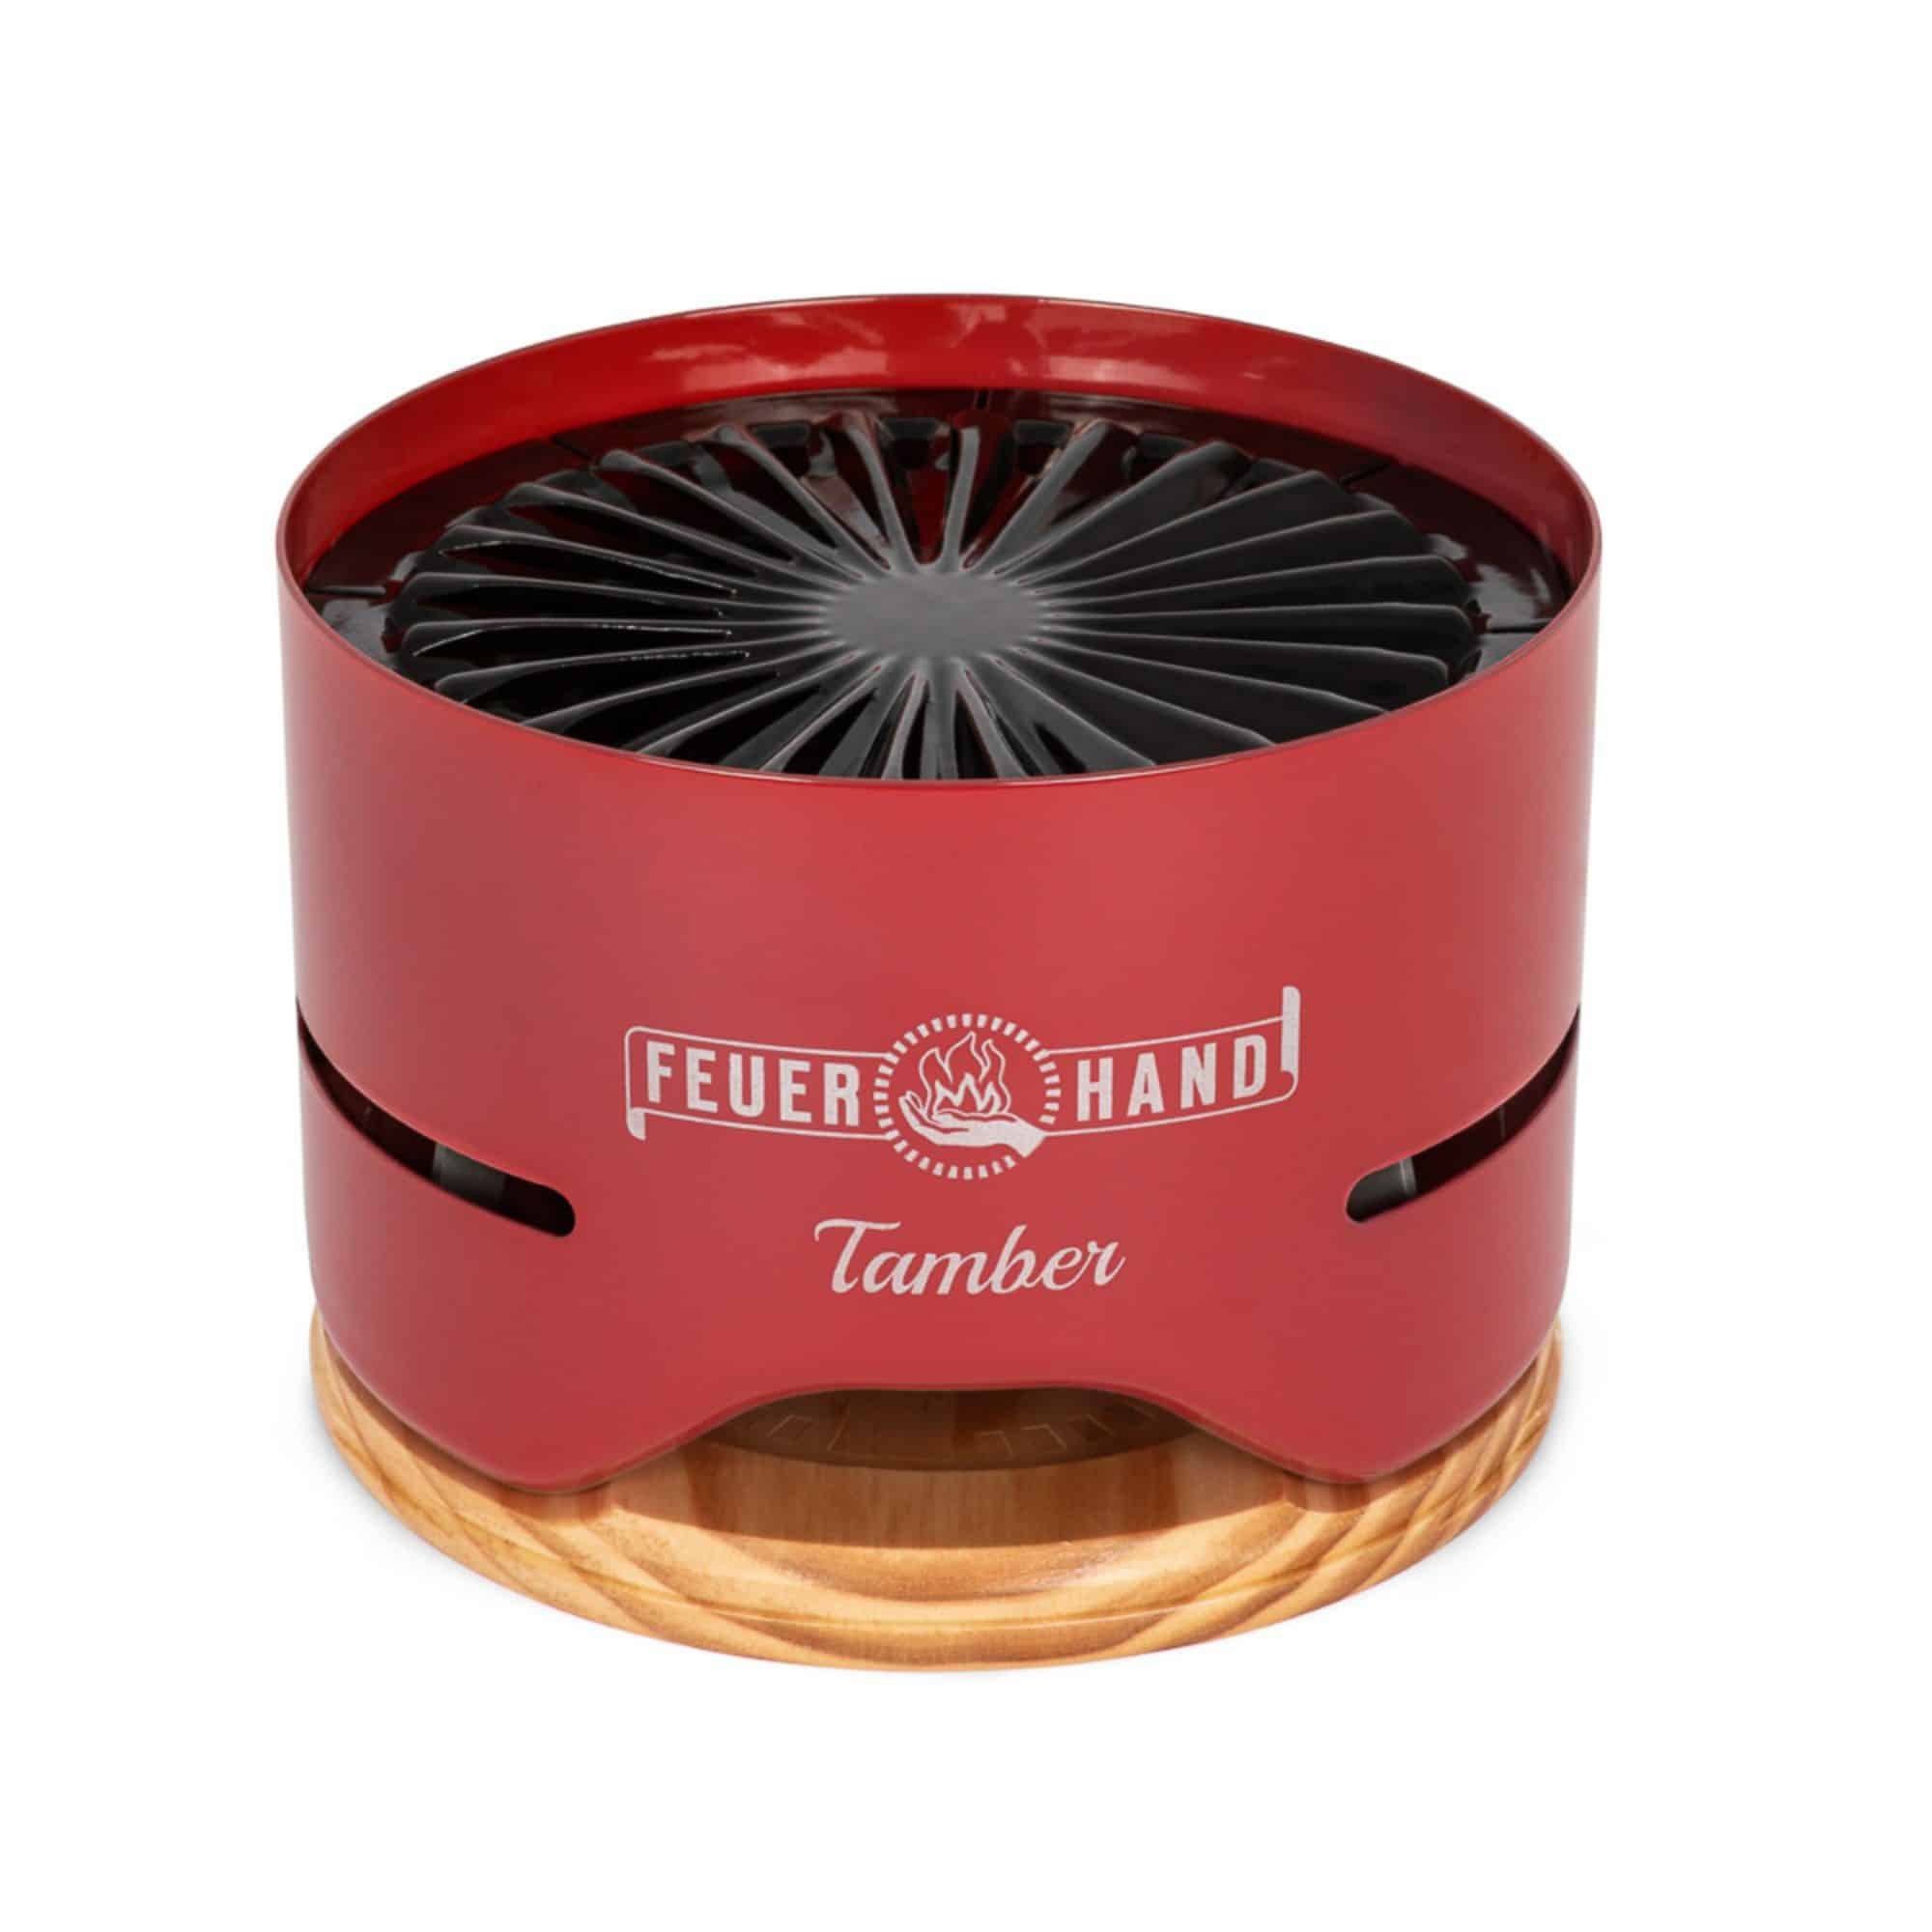 Feuerhand - Tischgrill Tamber - Barbecue rubinrot